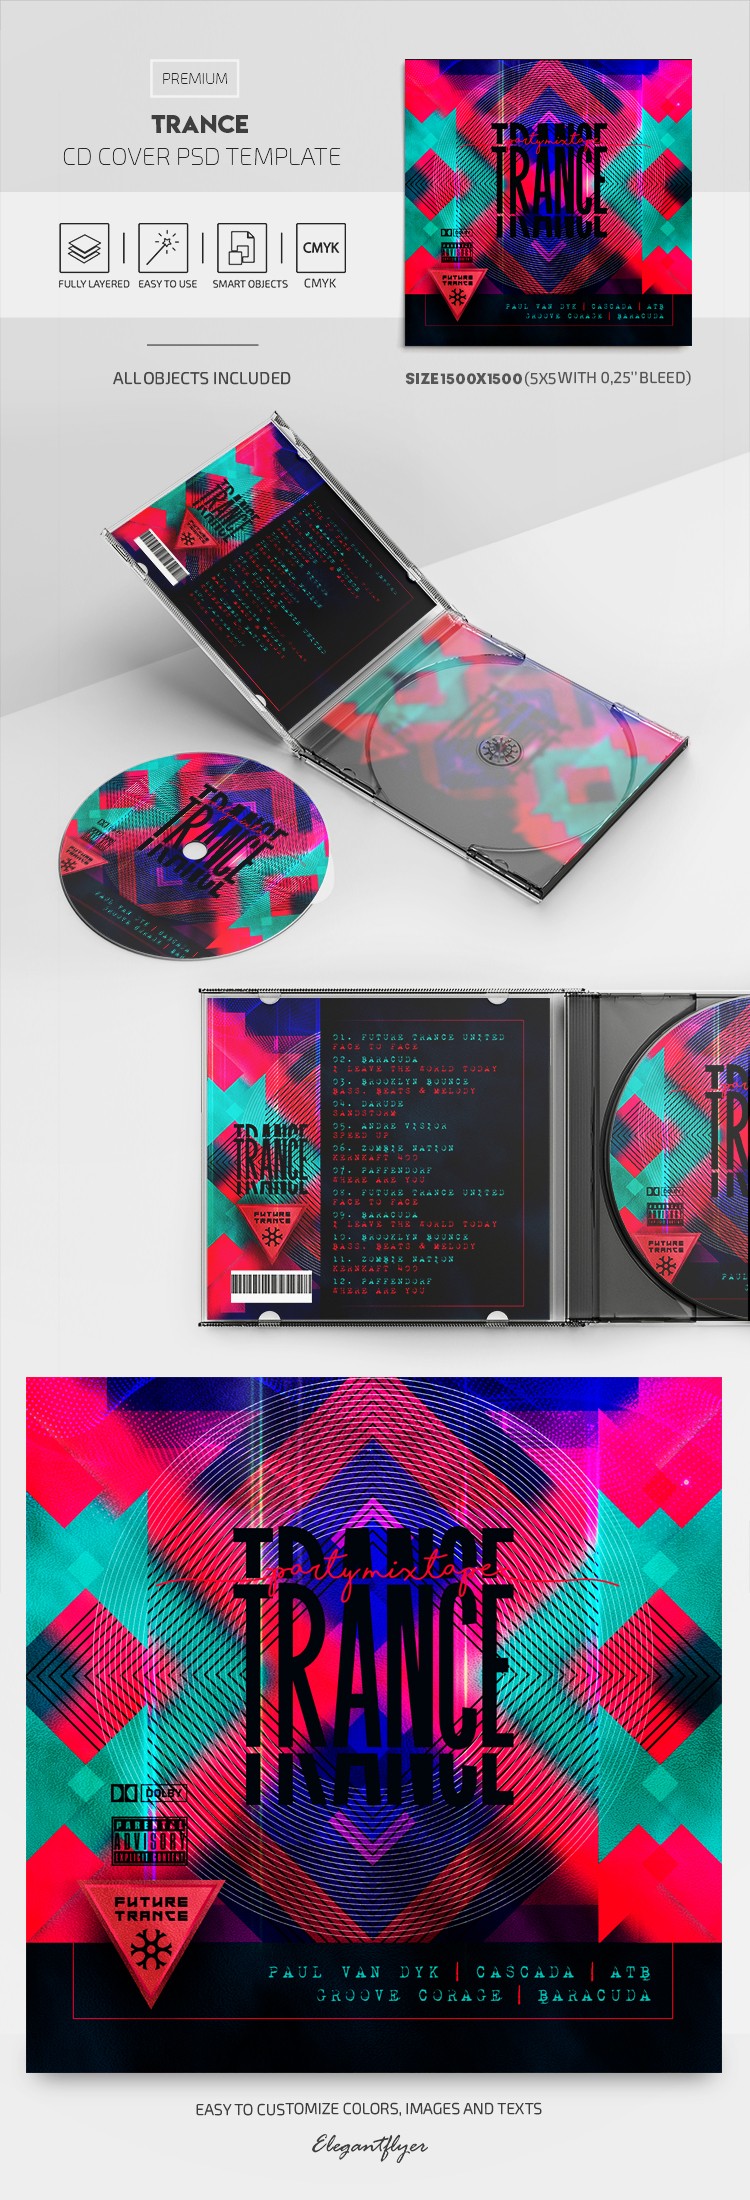 Portada del CD de trance by ElegantFlyer